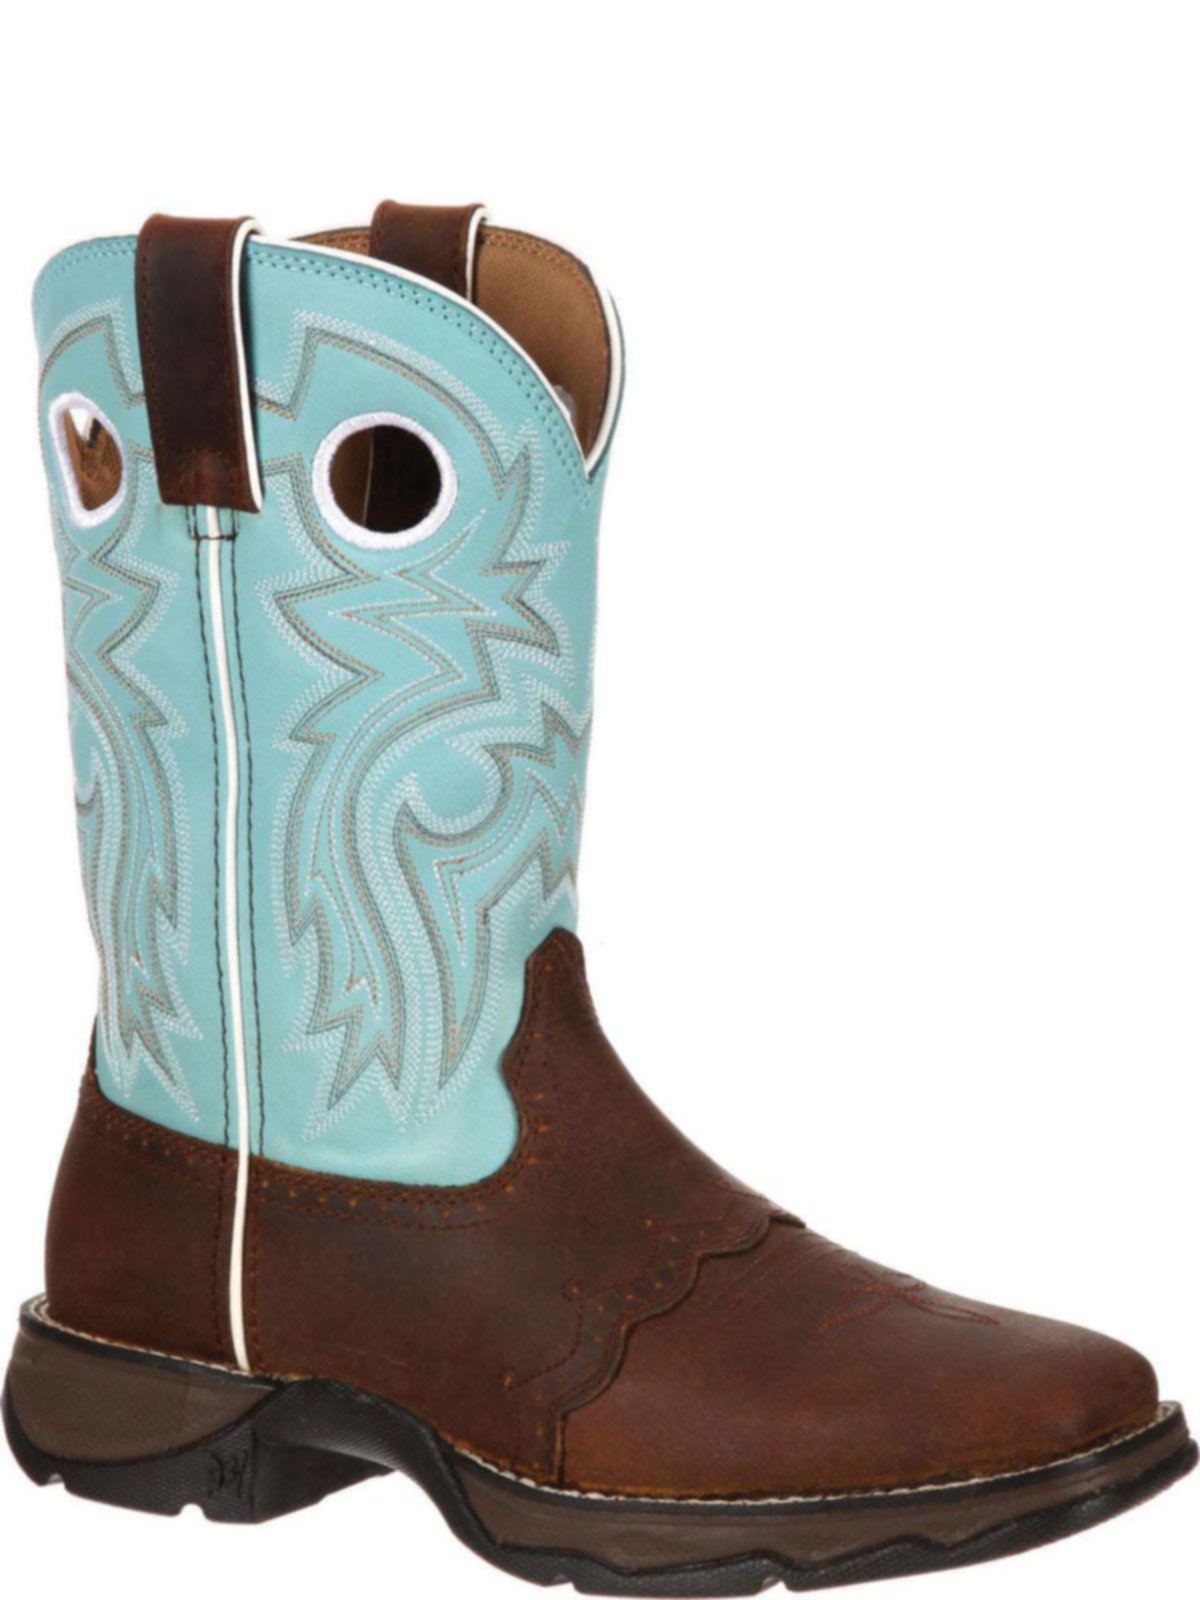 comfortable square toe cowboy boots